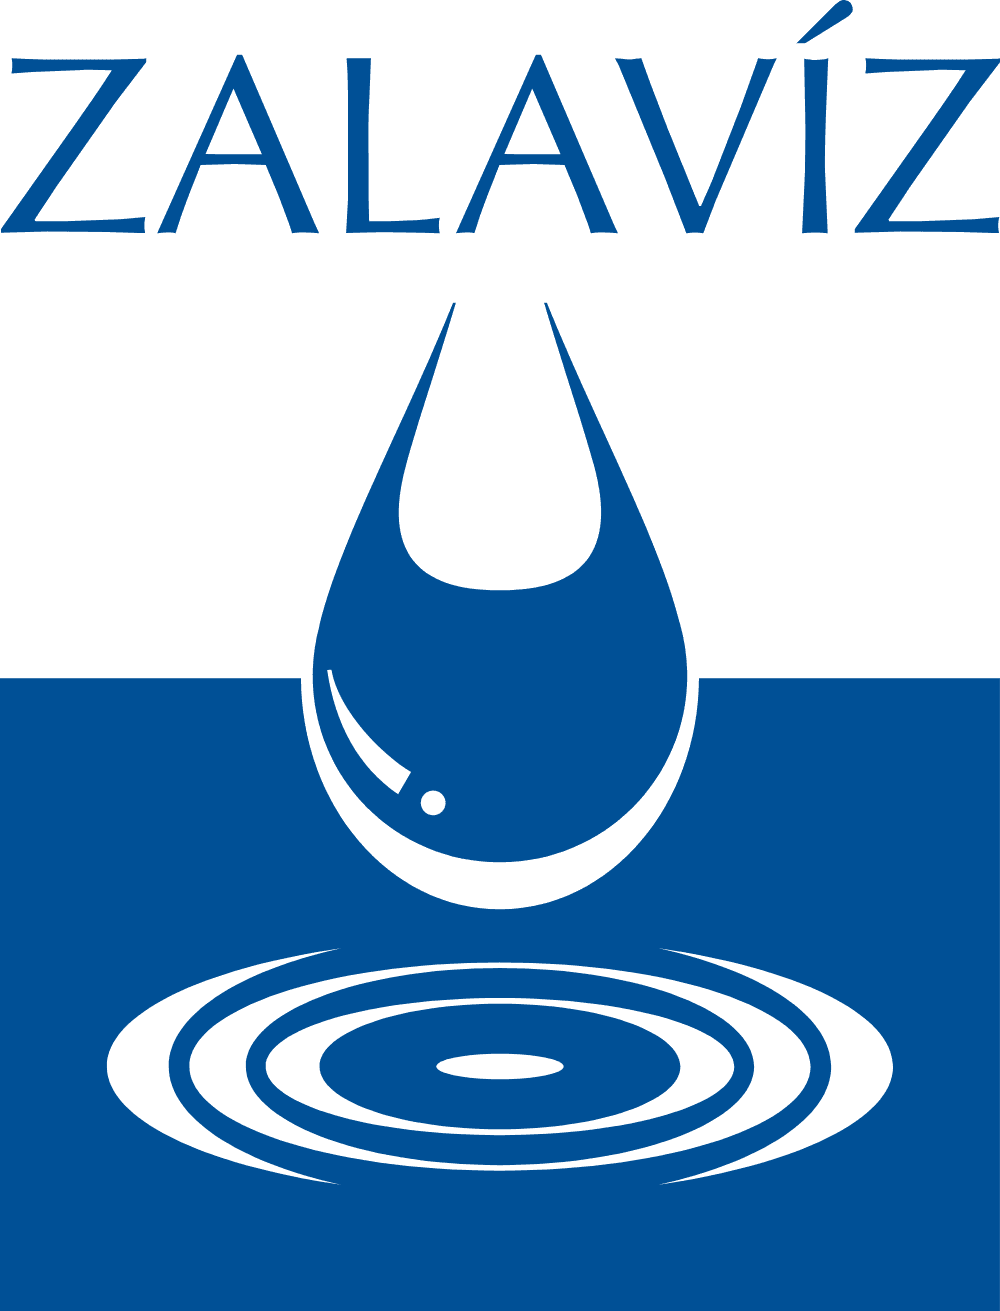 Zalavíz Zrt. Logo download